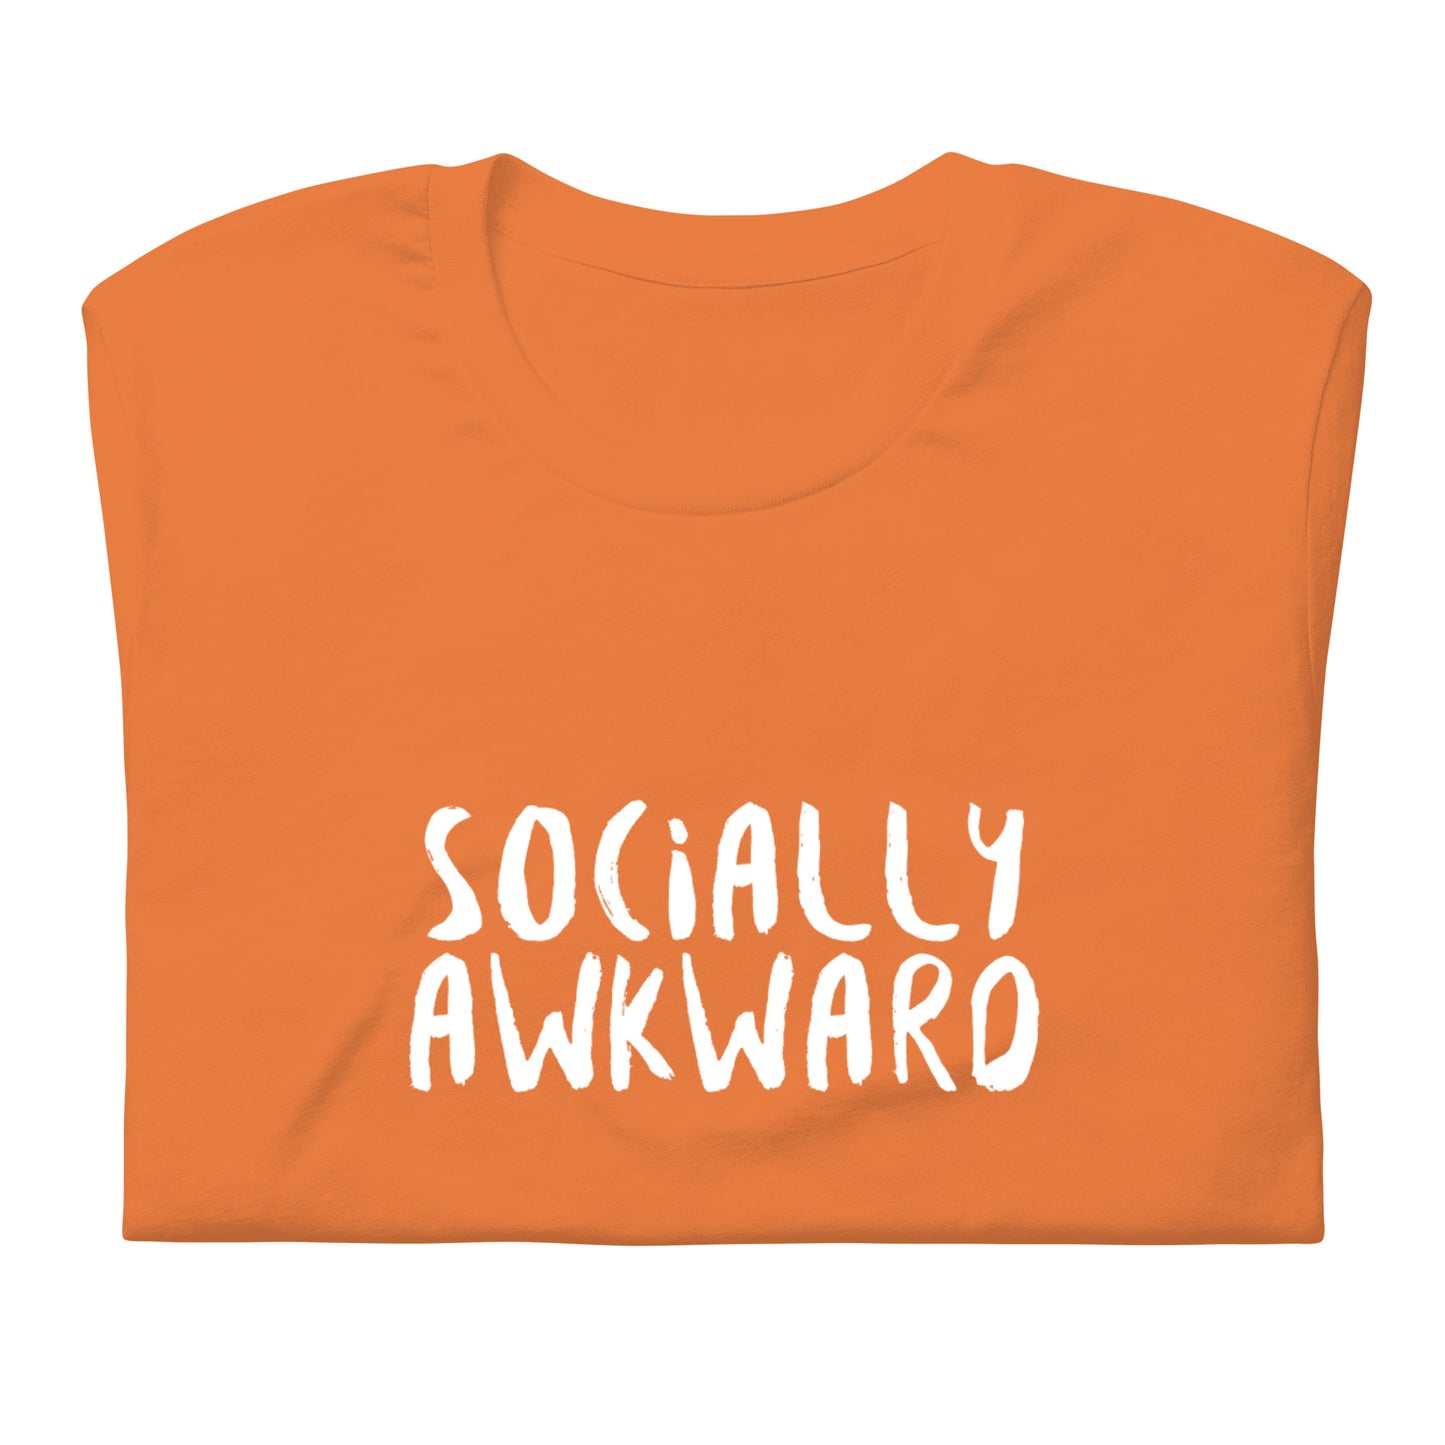 Socially awkward